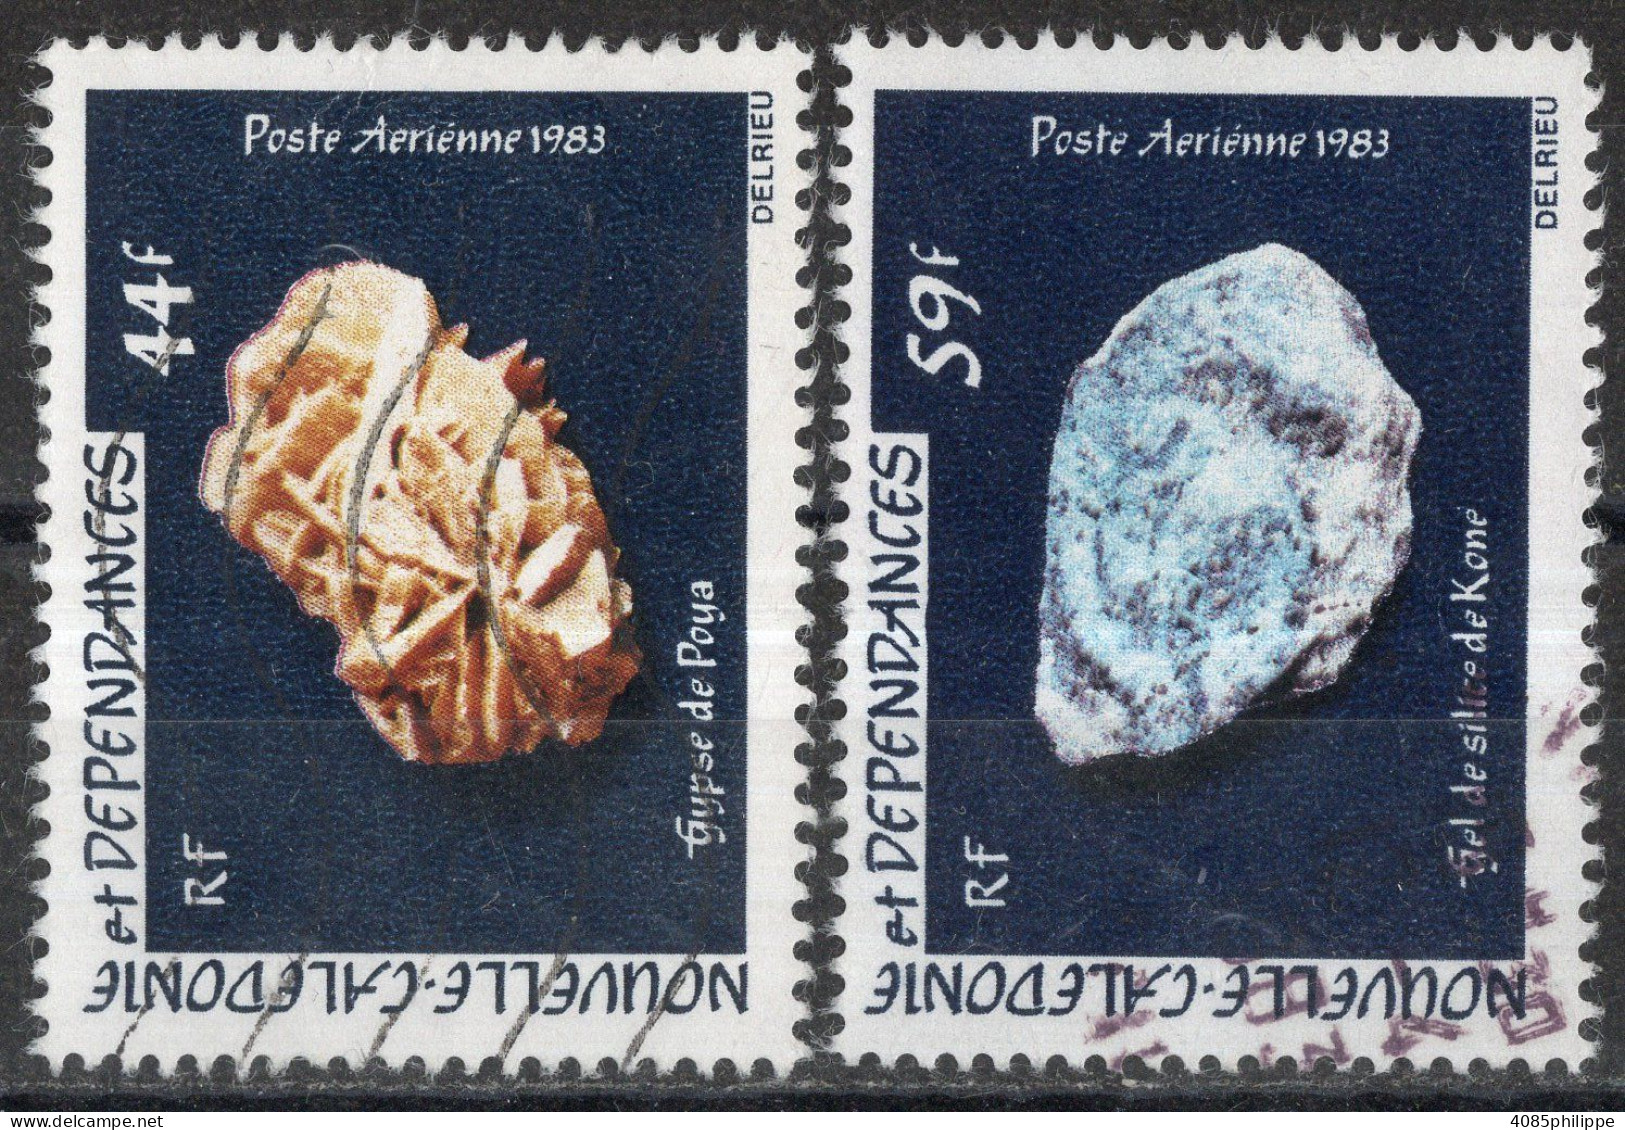 Nvelle CALEDONIE Timbres-Poste Aérienne N°227 & 228 Oblitérés Cote : 3€50 - Used Stamps